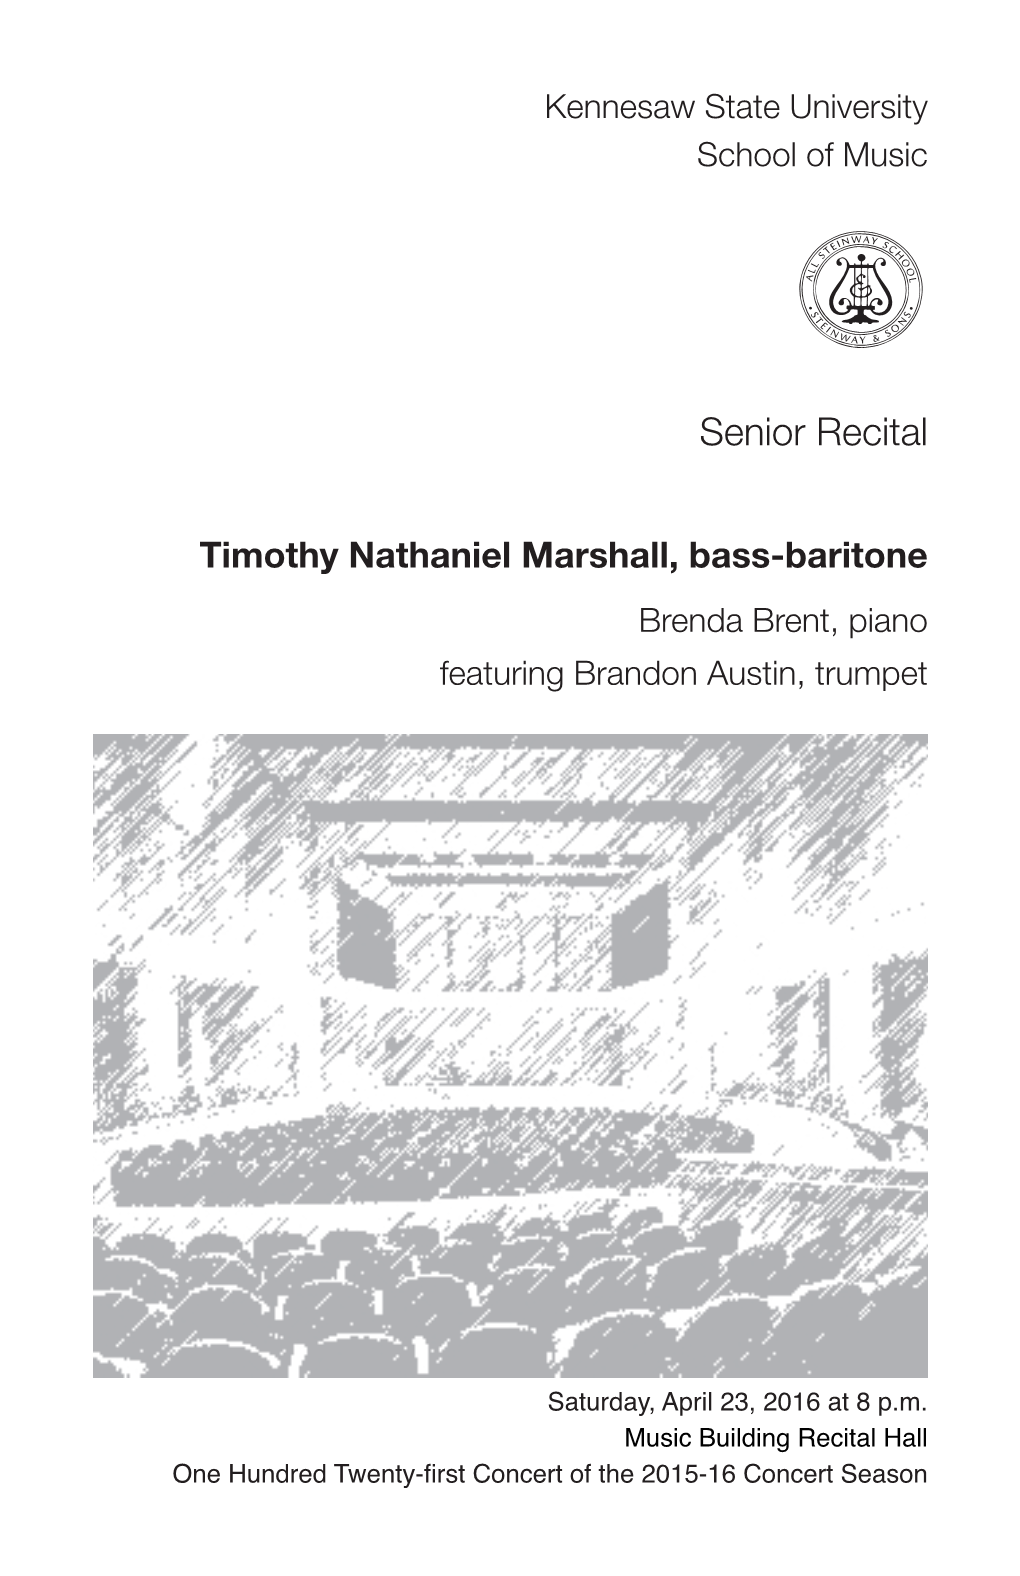 Senior Recital: Timothy Nathaniel Marshall, Bass-Baritone